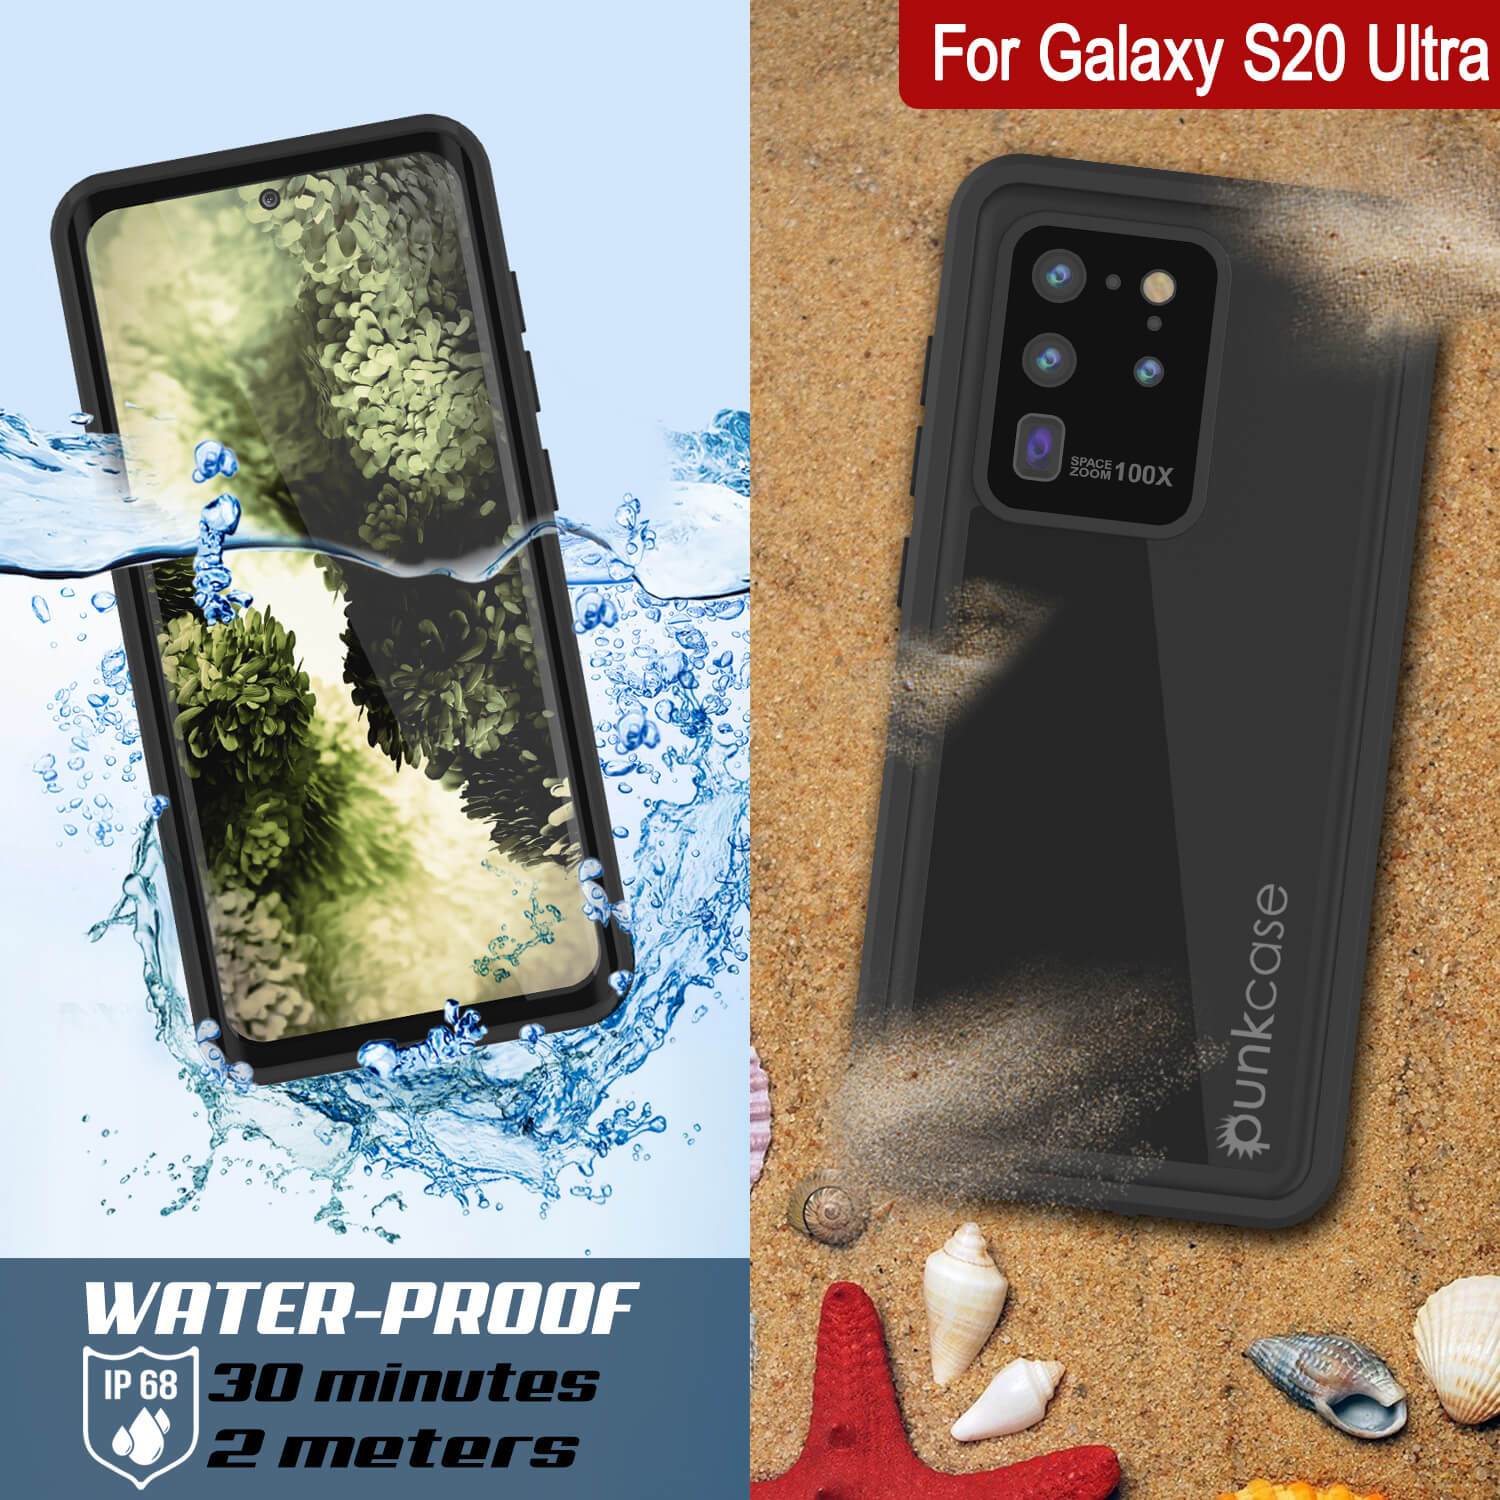 Galaxy S20 Ultra Waterproof Case PunkCase StudStar Black Thin 6.6ft Underwater IP68 Shock/Snow Proof